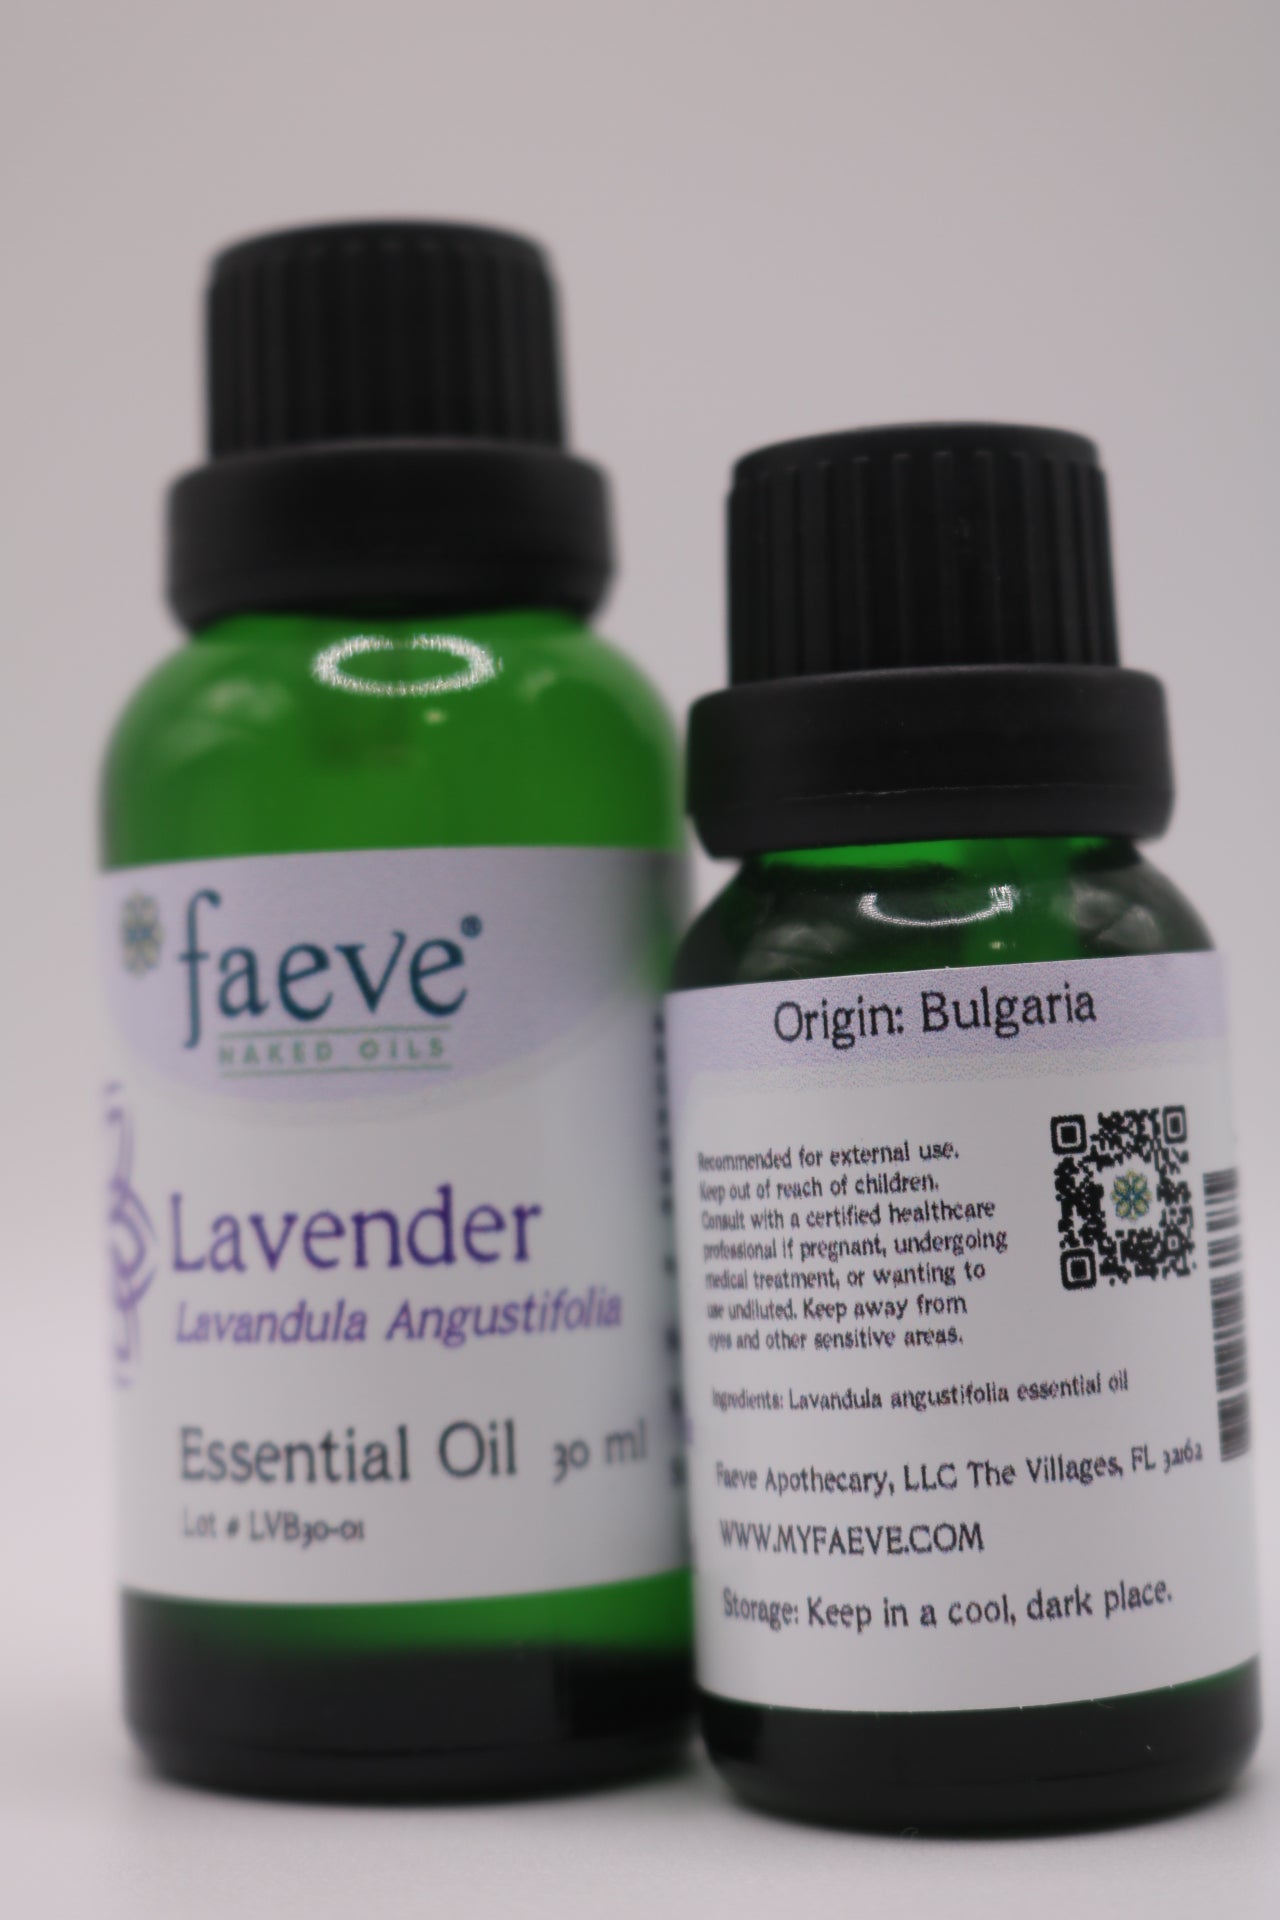 Lavender, Lavandula angustifolia